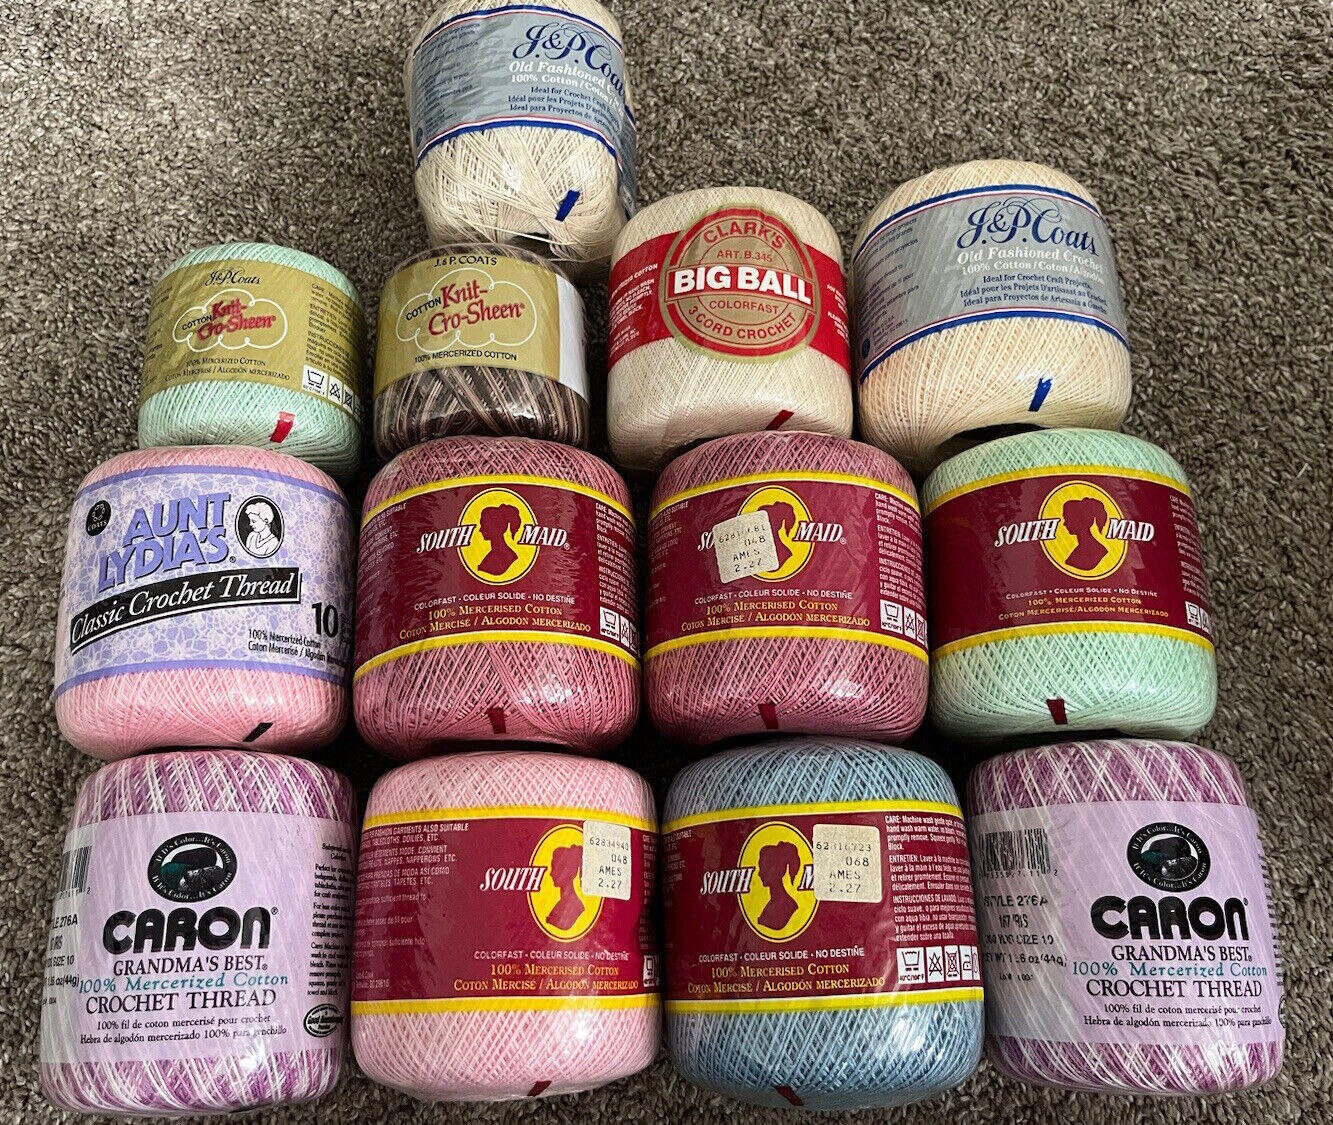 100% Acrylic Yarn, Colorful Crochet Yarn Skeins for Knitting/Crocheting  (Pack of 24-50 Yard) 